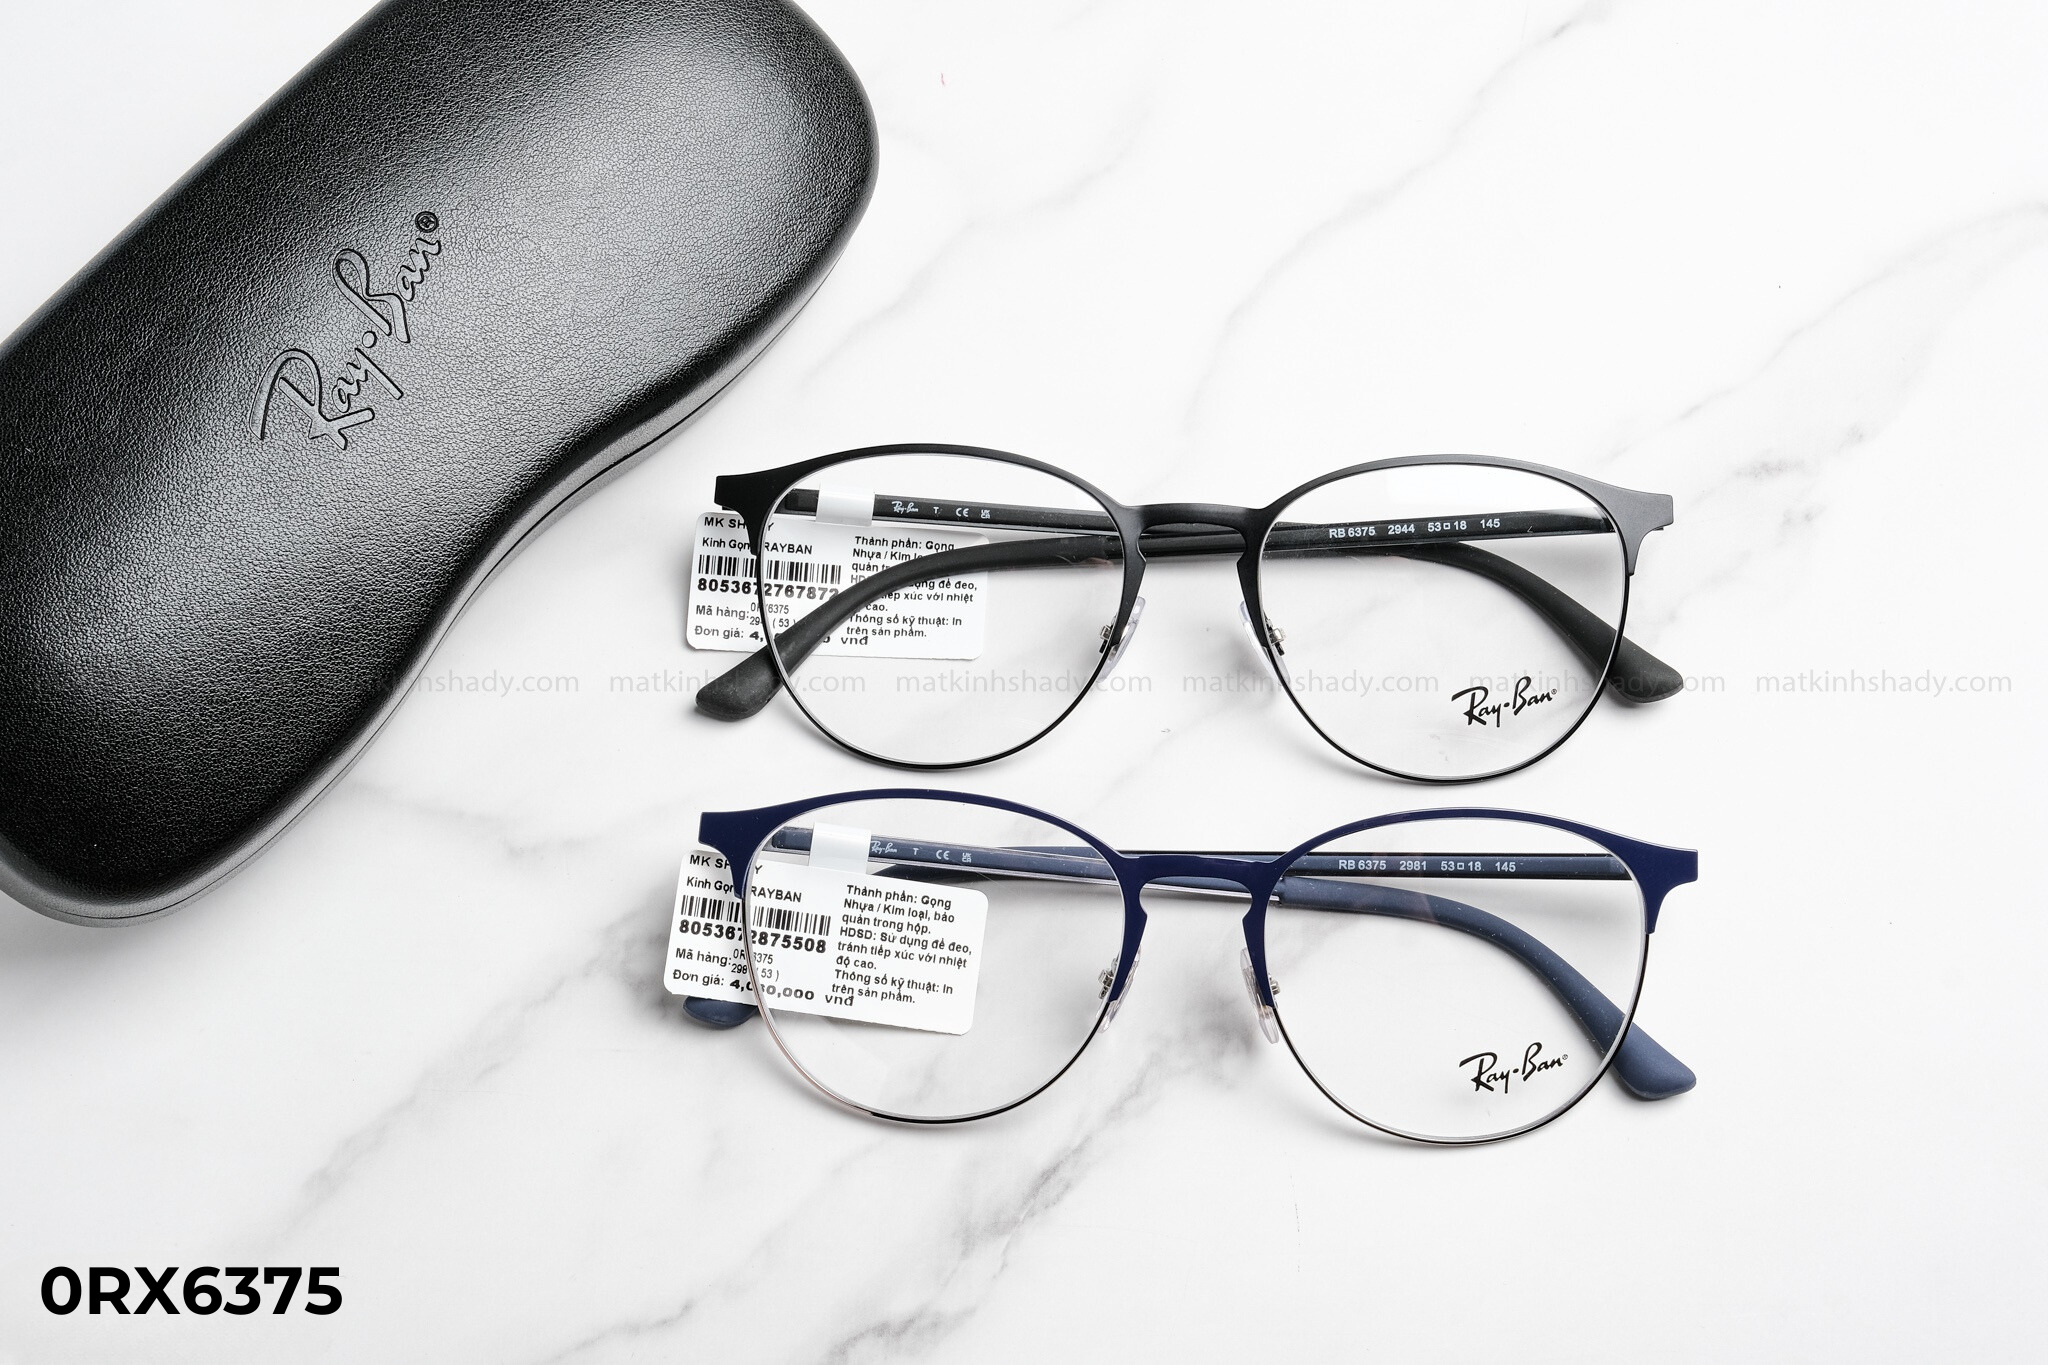  Rayban Eyewear - Glasses - 0RX6375 